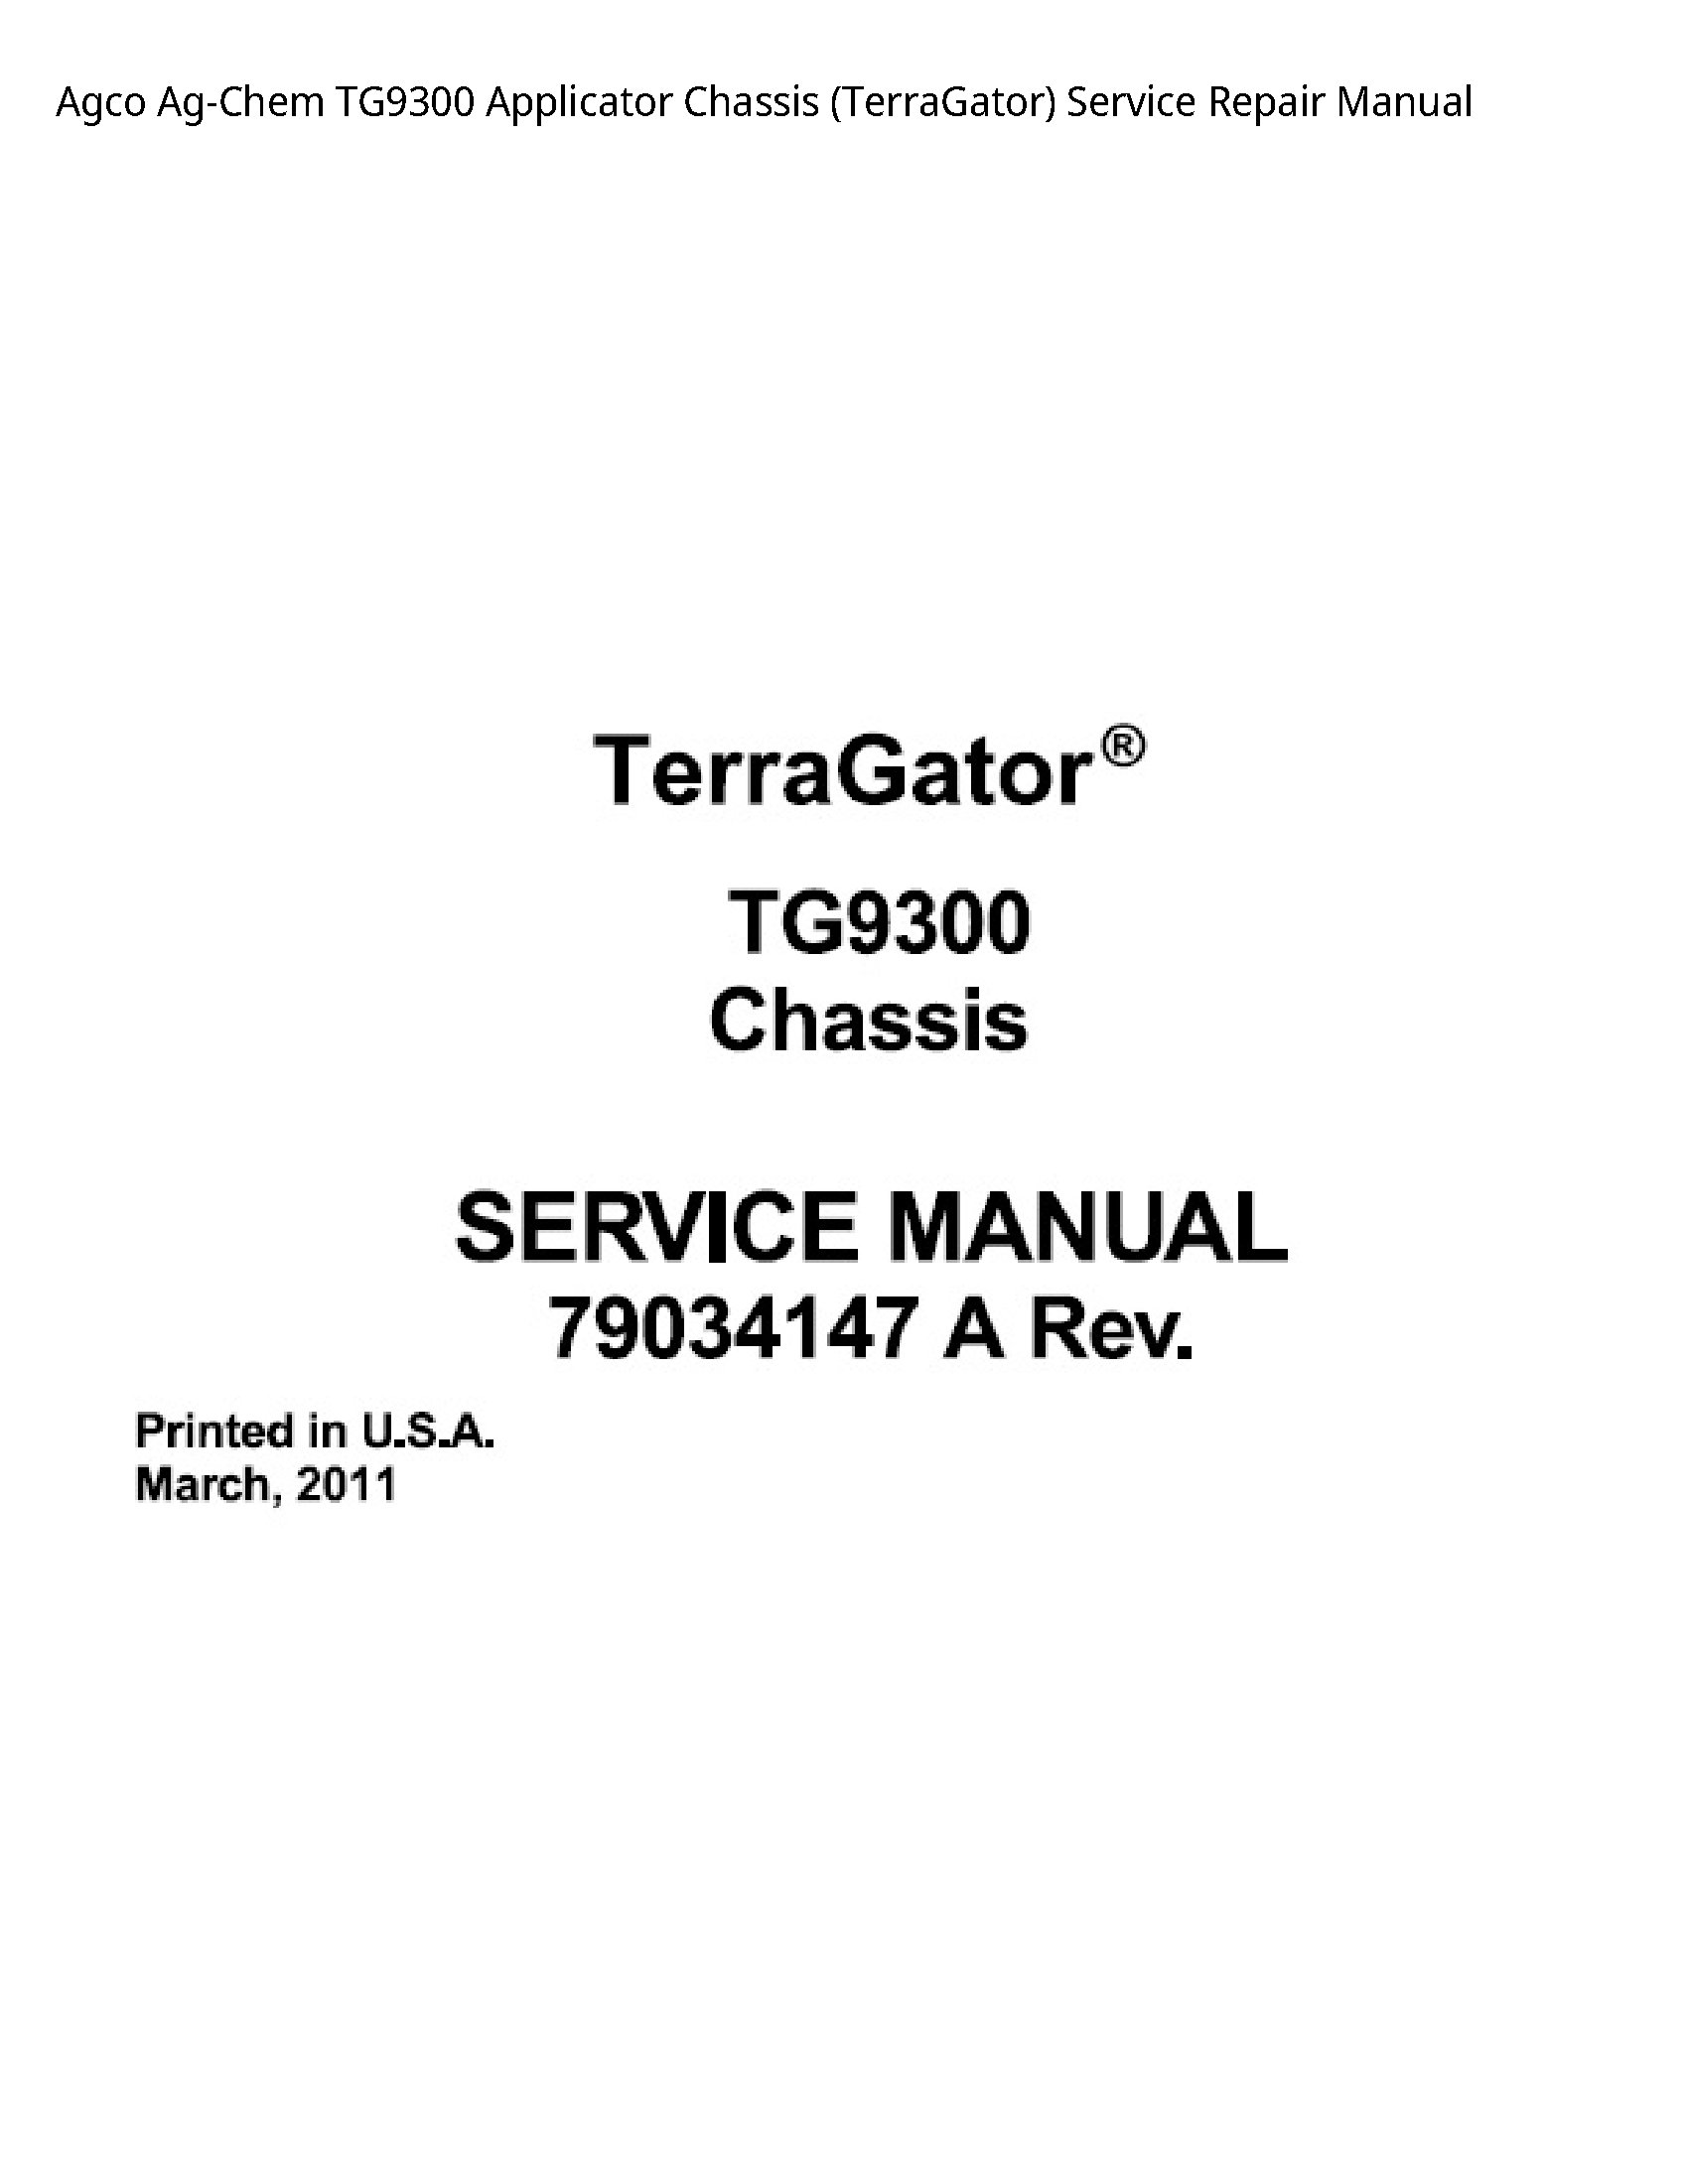 AGCO TG9300 Ag-Chem Applicator Chassis (TerraGator) manual